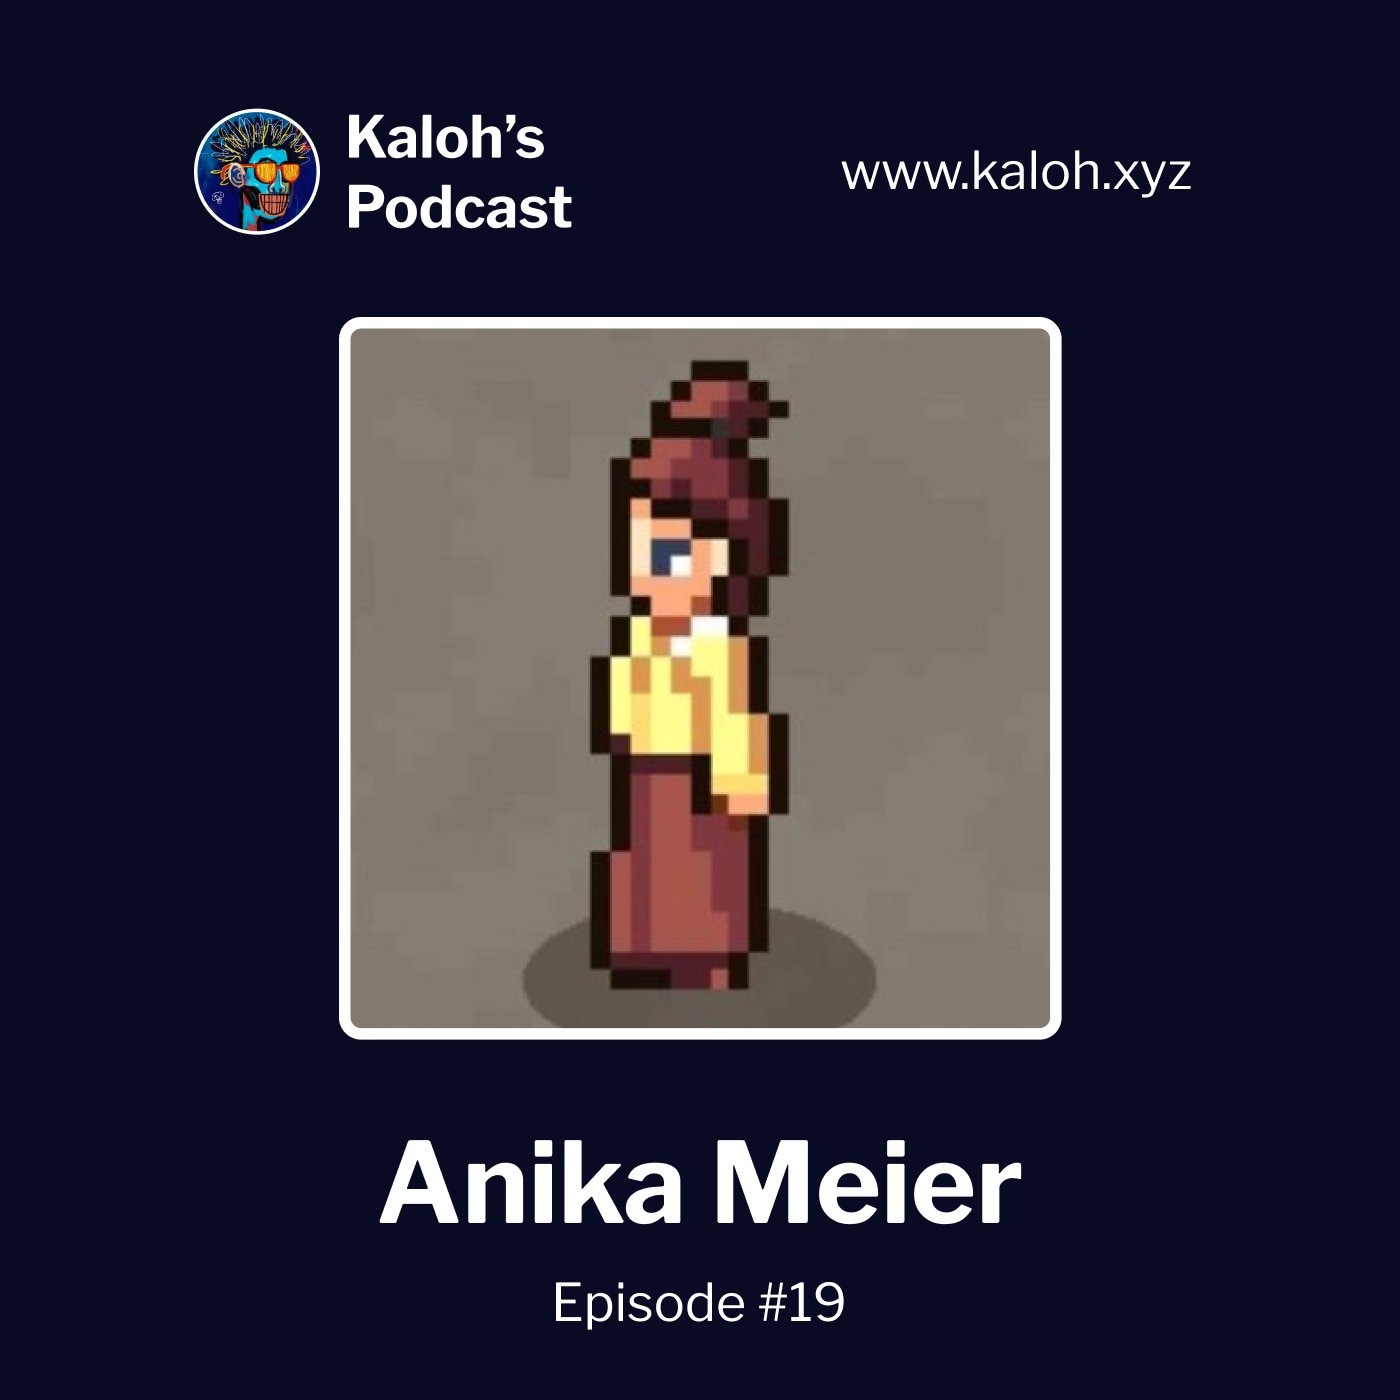 Kaloh's Podcast Episode 19: Anika Meier